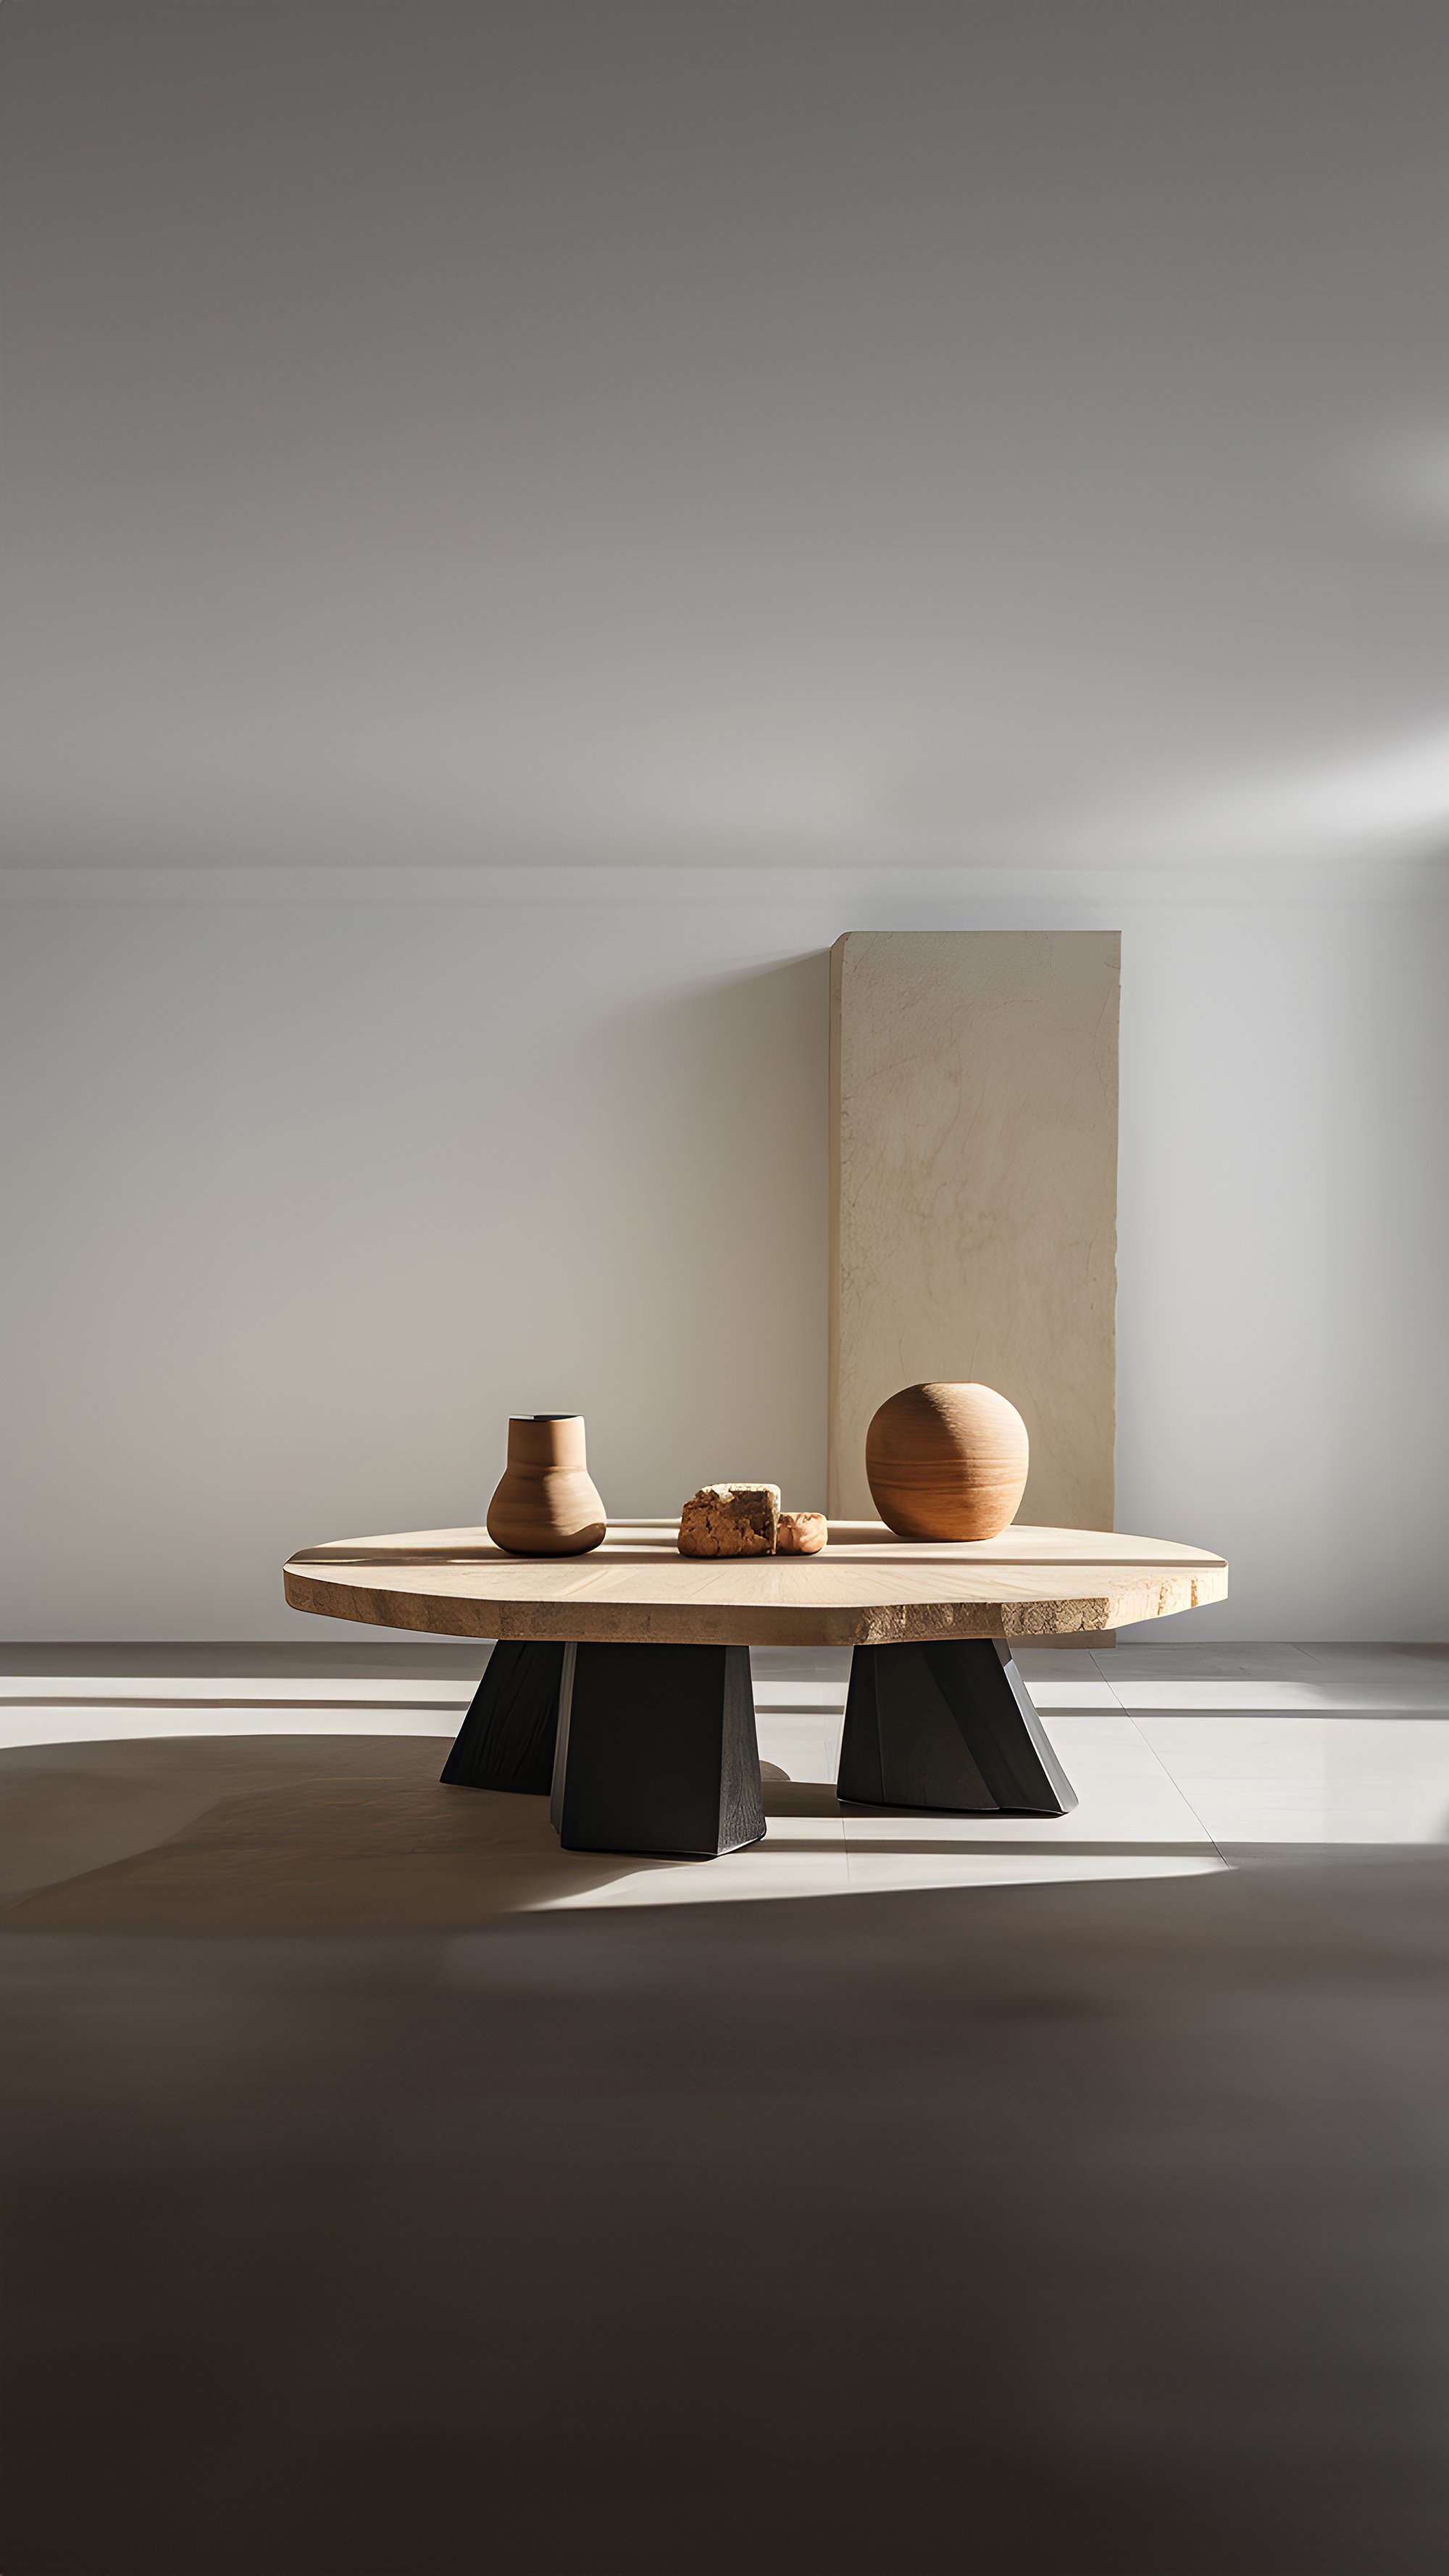 Duo-Tone Square Coffee Table - Dynamic Fundamenta 35 by NONO — 10.jpg